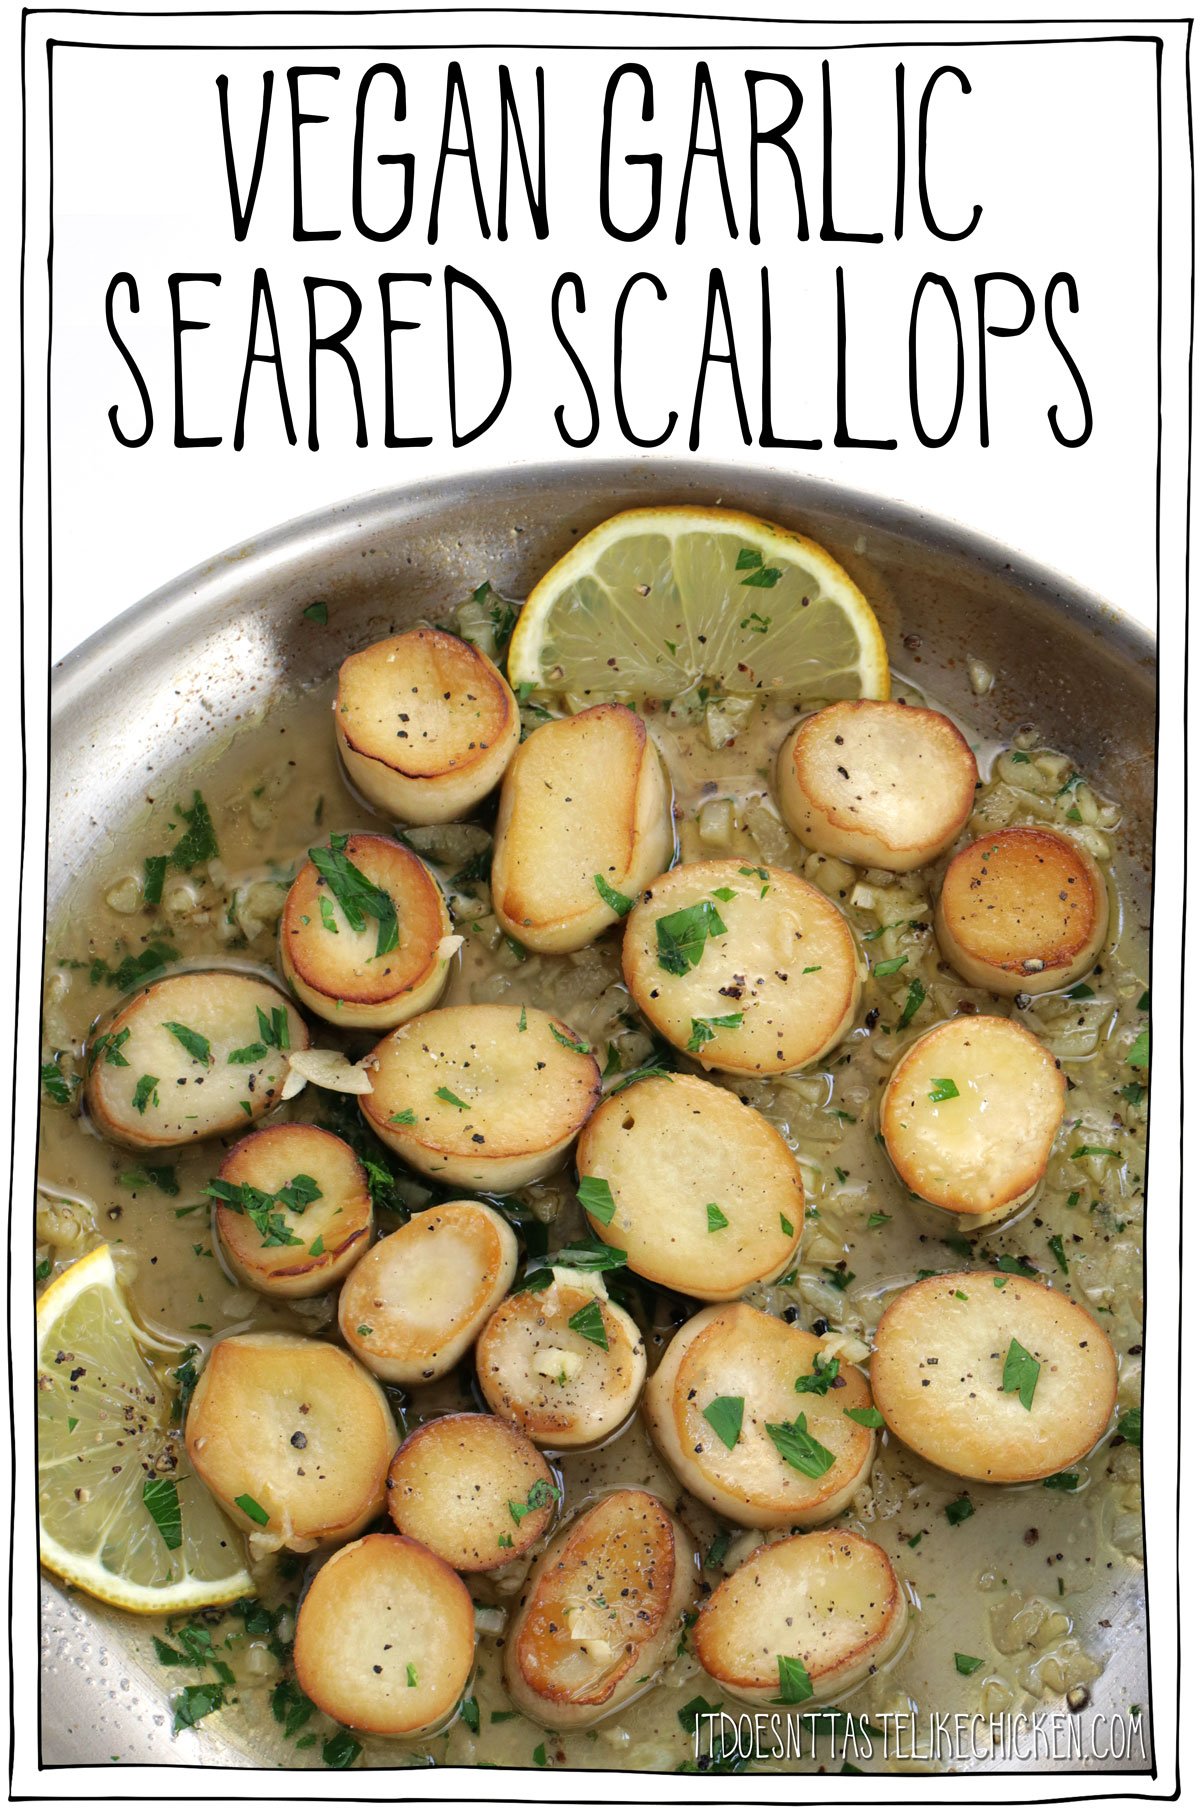 Vegan Garlic Seared Scallops The Best Vegan Recipes of 2021